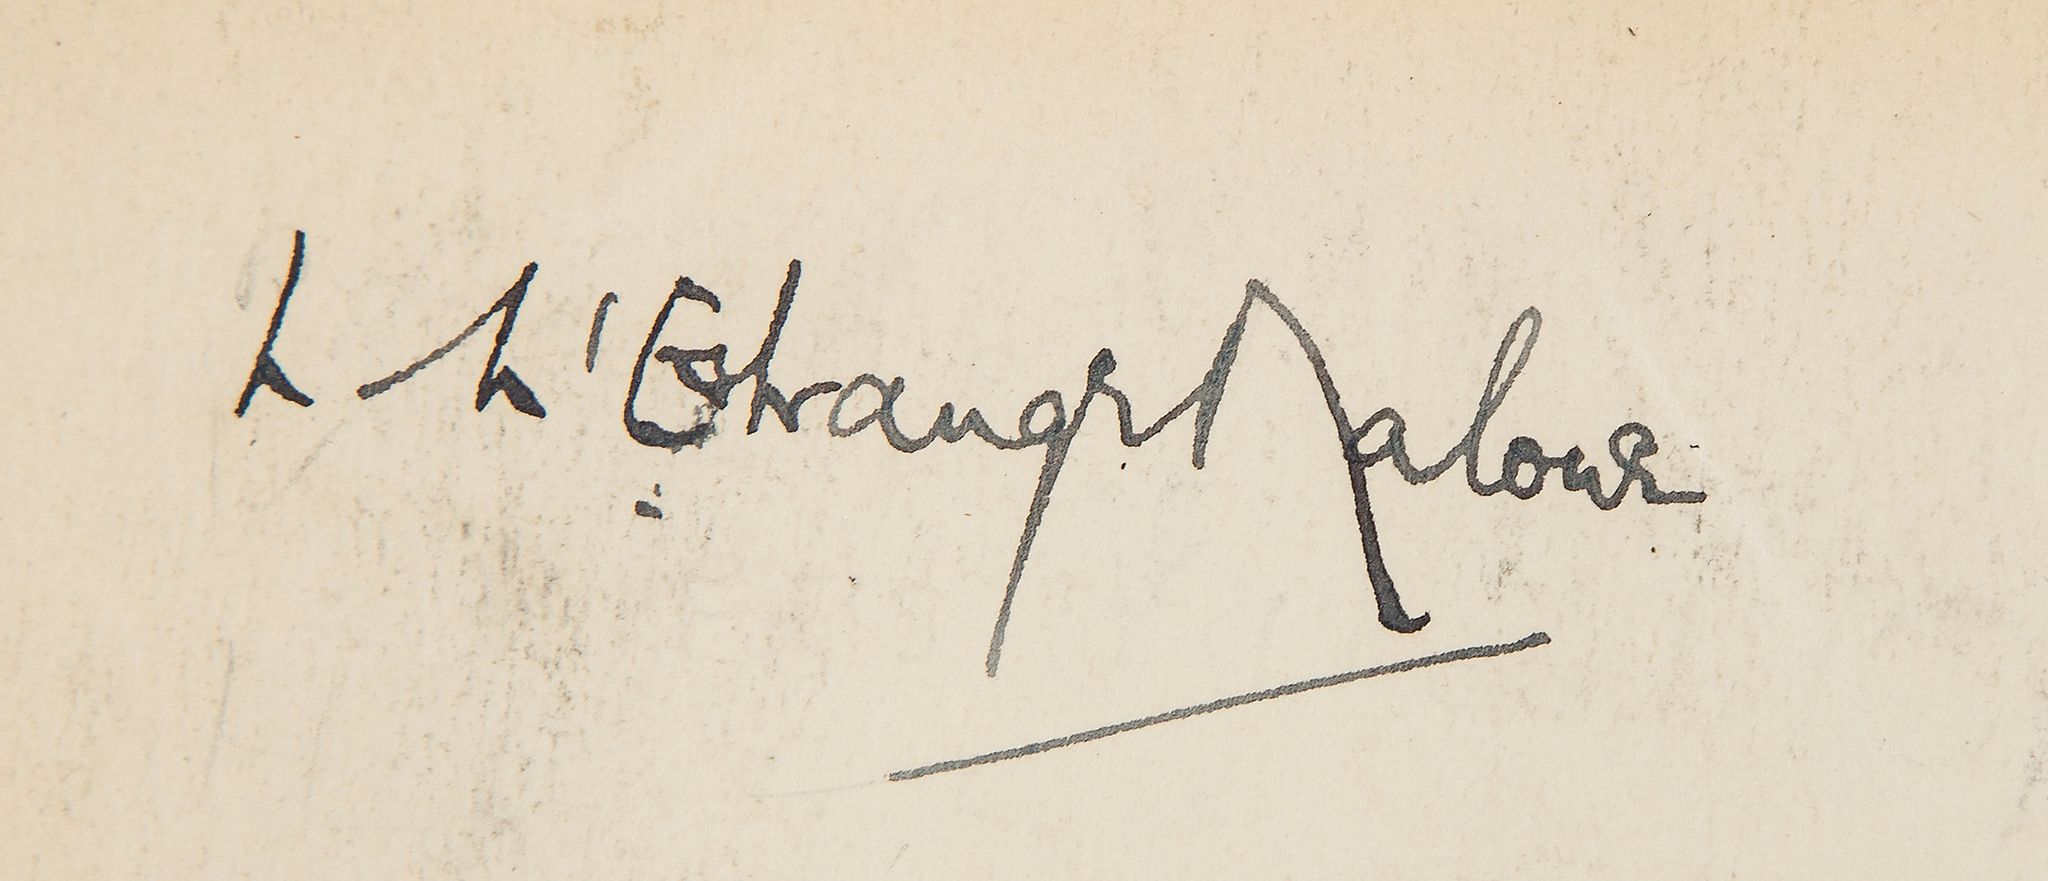 AUTOGRAPH ALBUM - INCL. BRITISH POLITICIANS - Autograph album with signatures by British politicians - Image 5 of 5